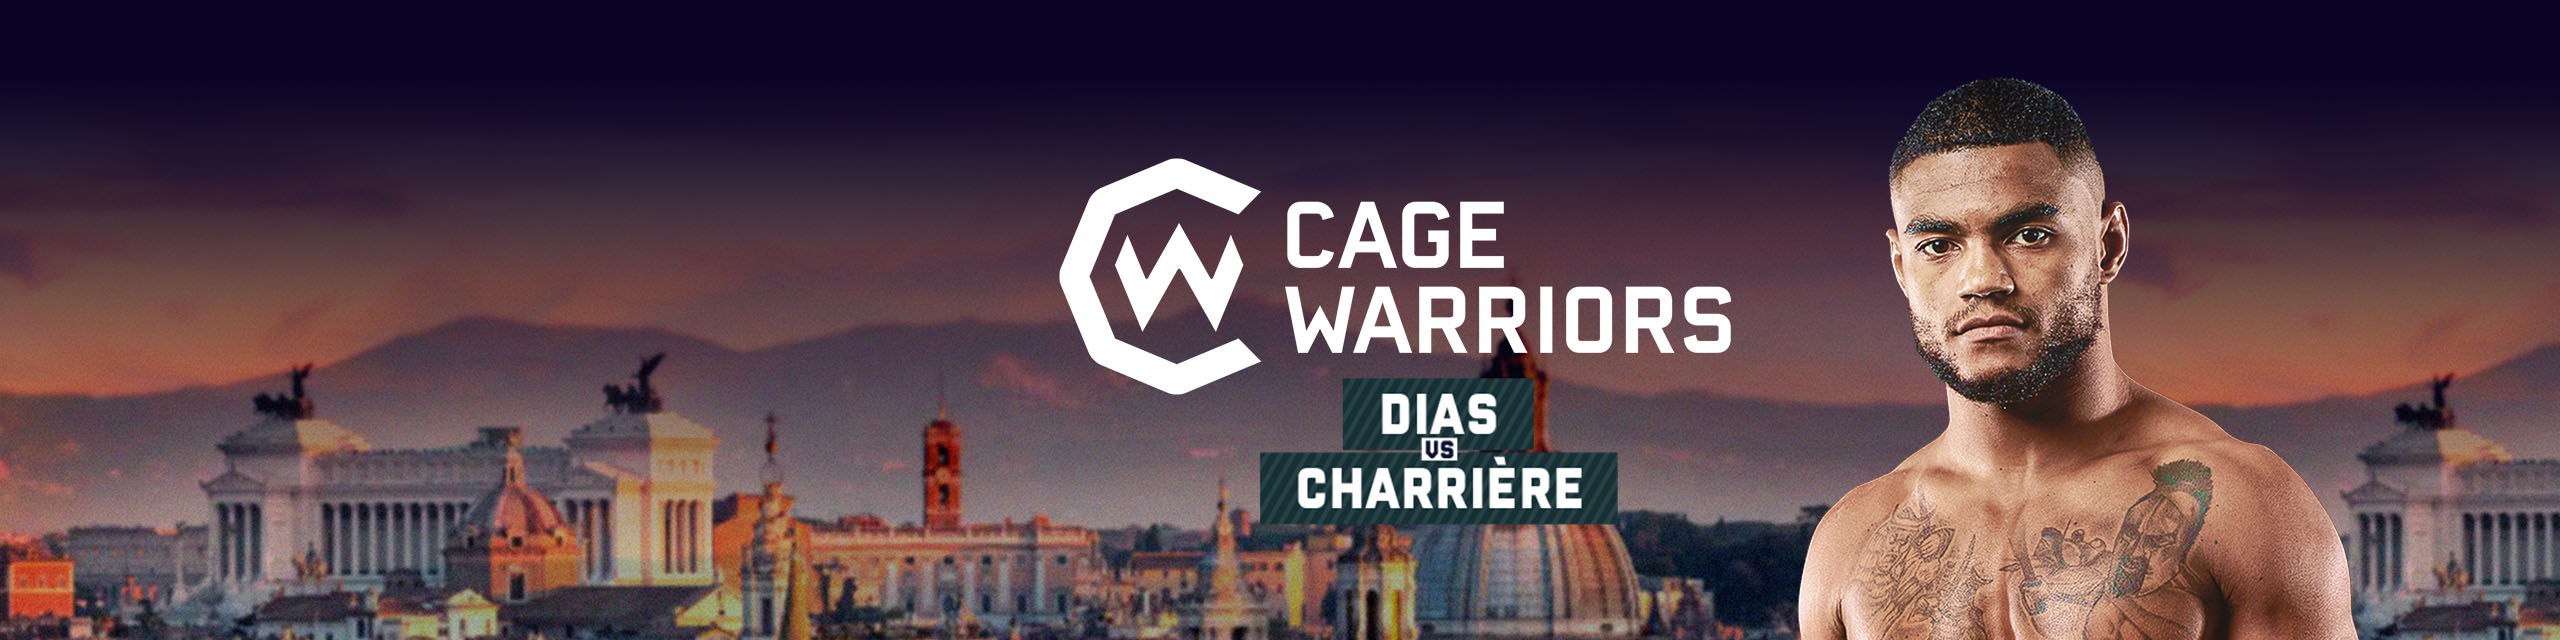 Cage_Warriors Dias_vs_Charriere